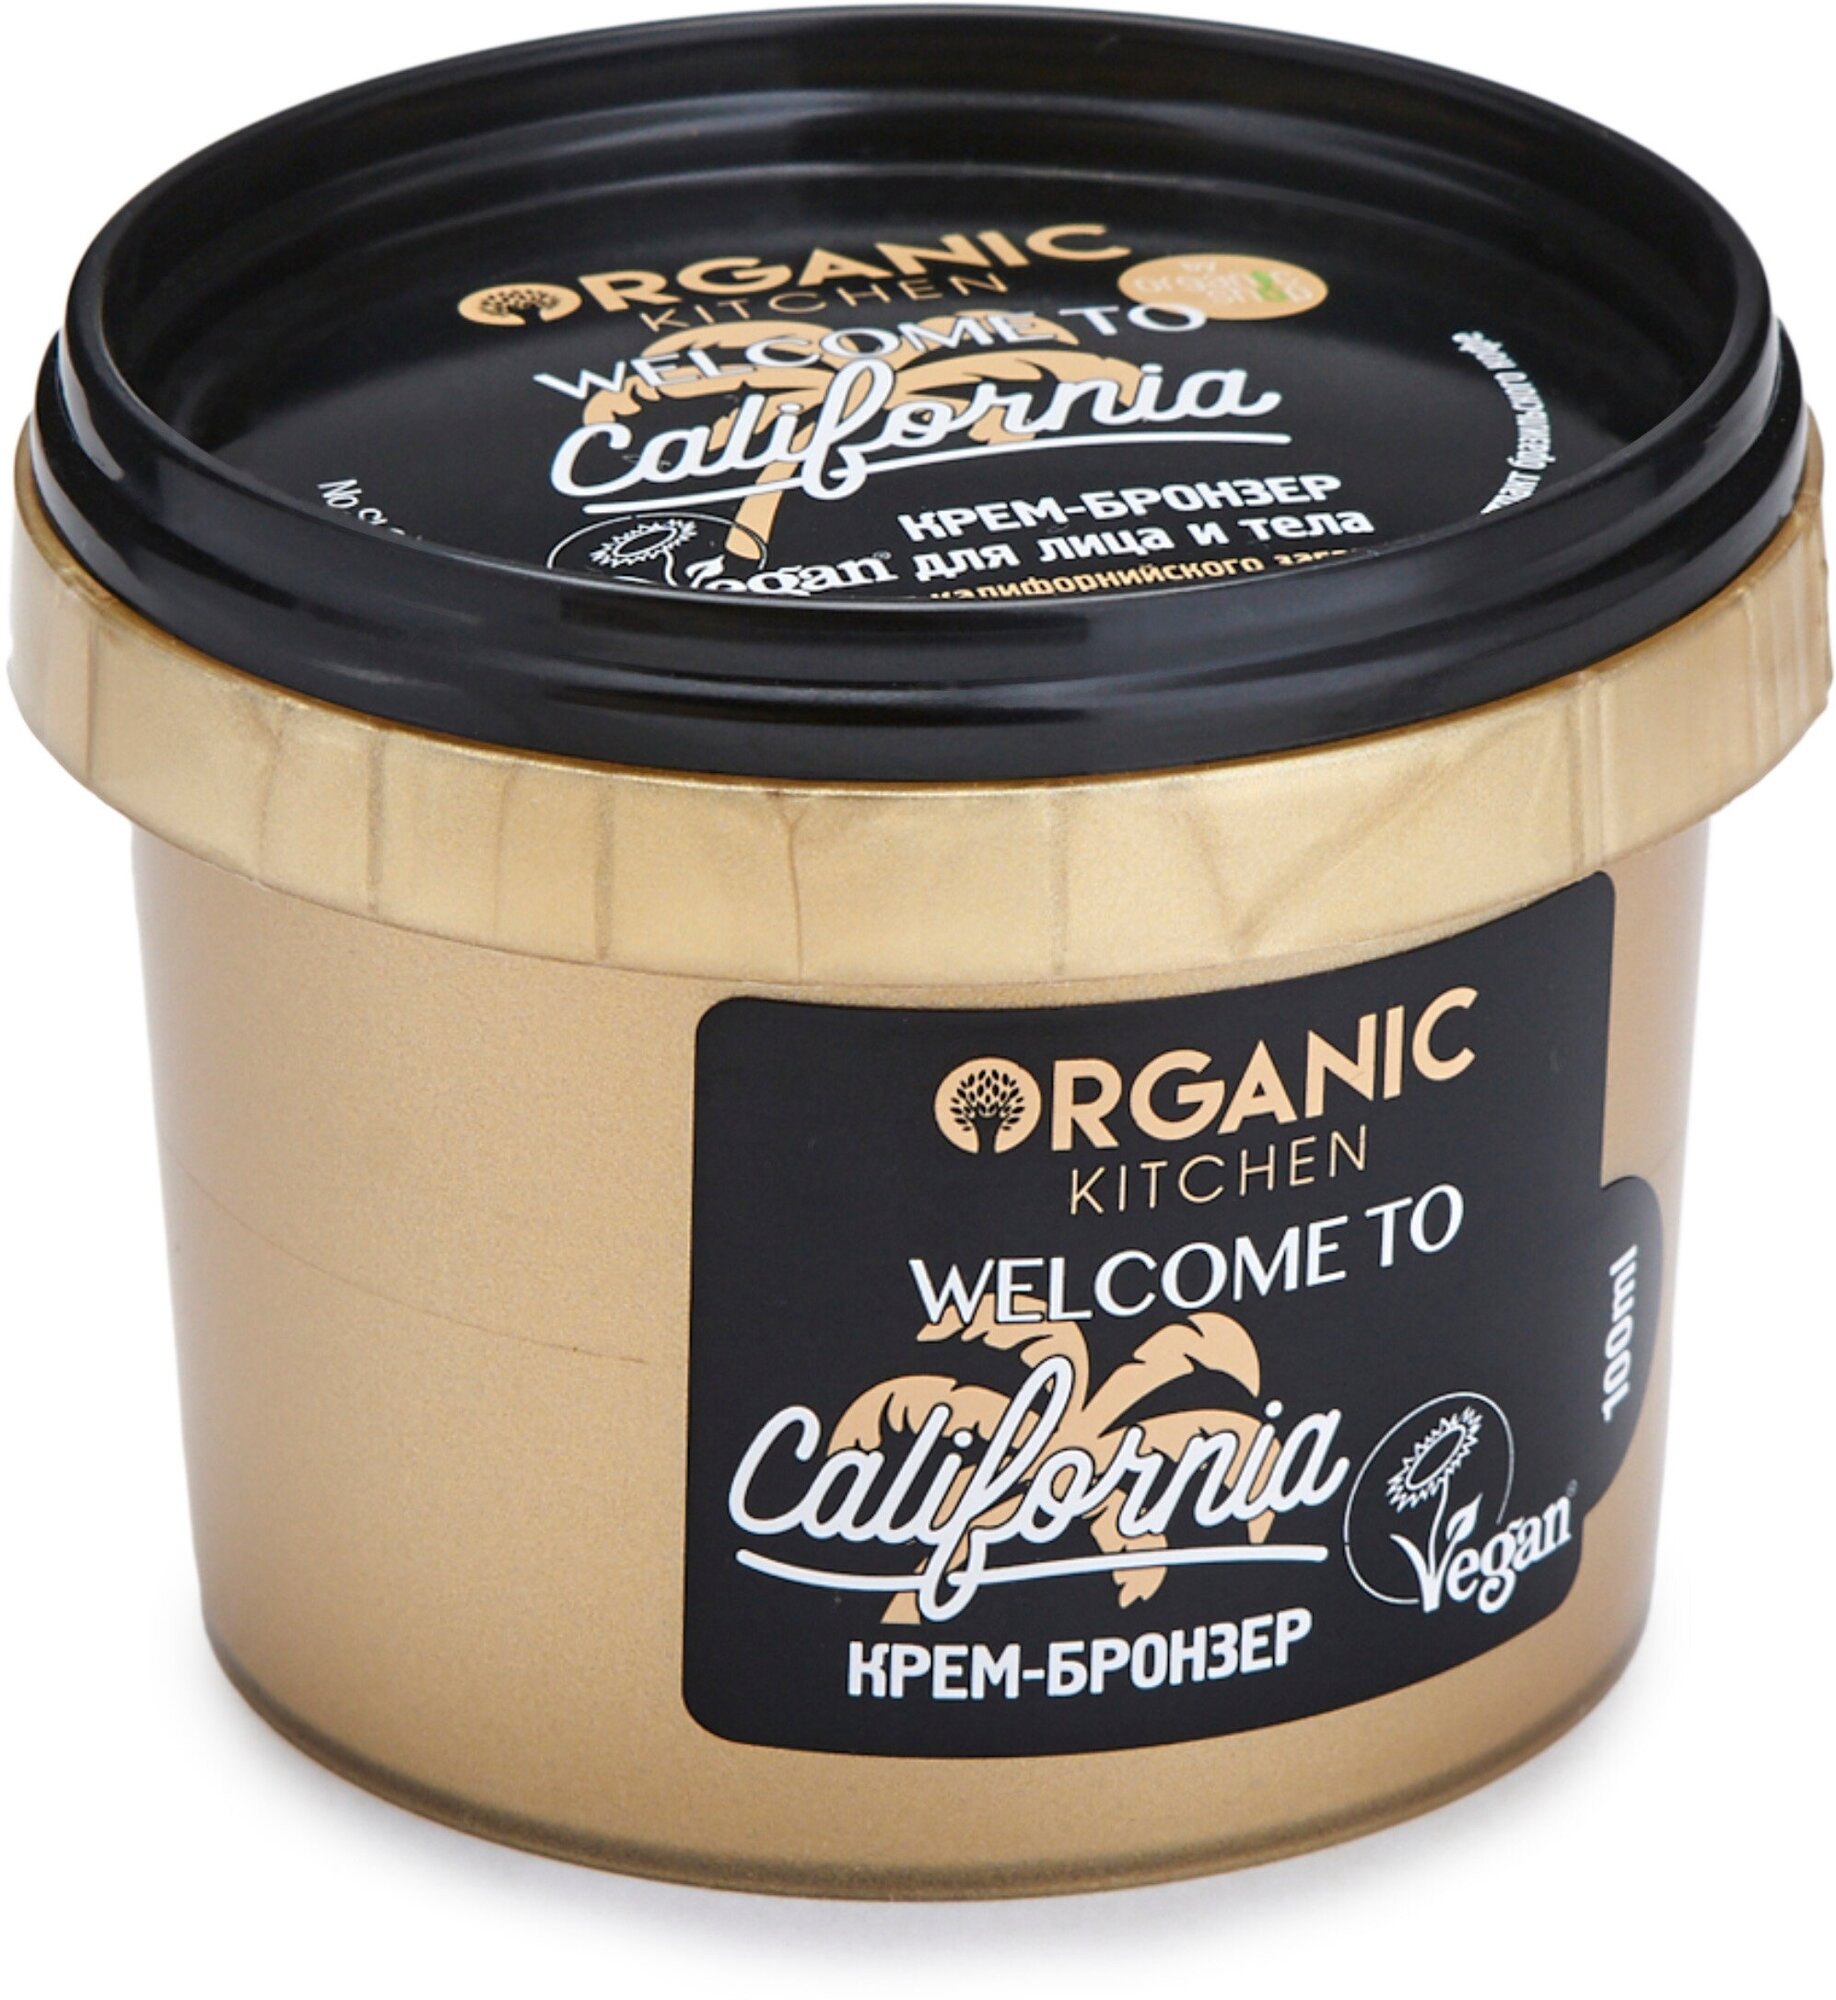 Крем-бронзер для лица и тела «Welcome to California» Organic Kitchen, 100 мл